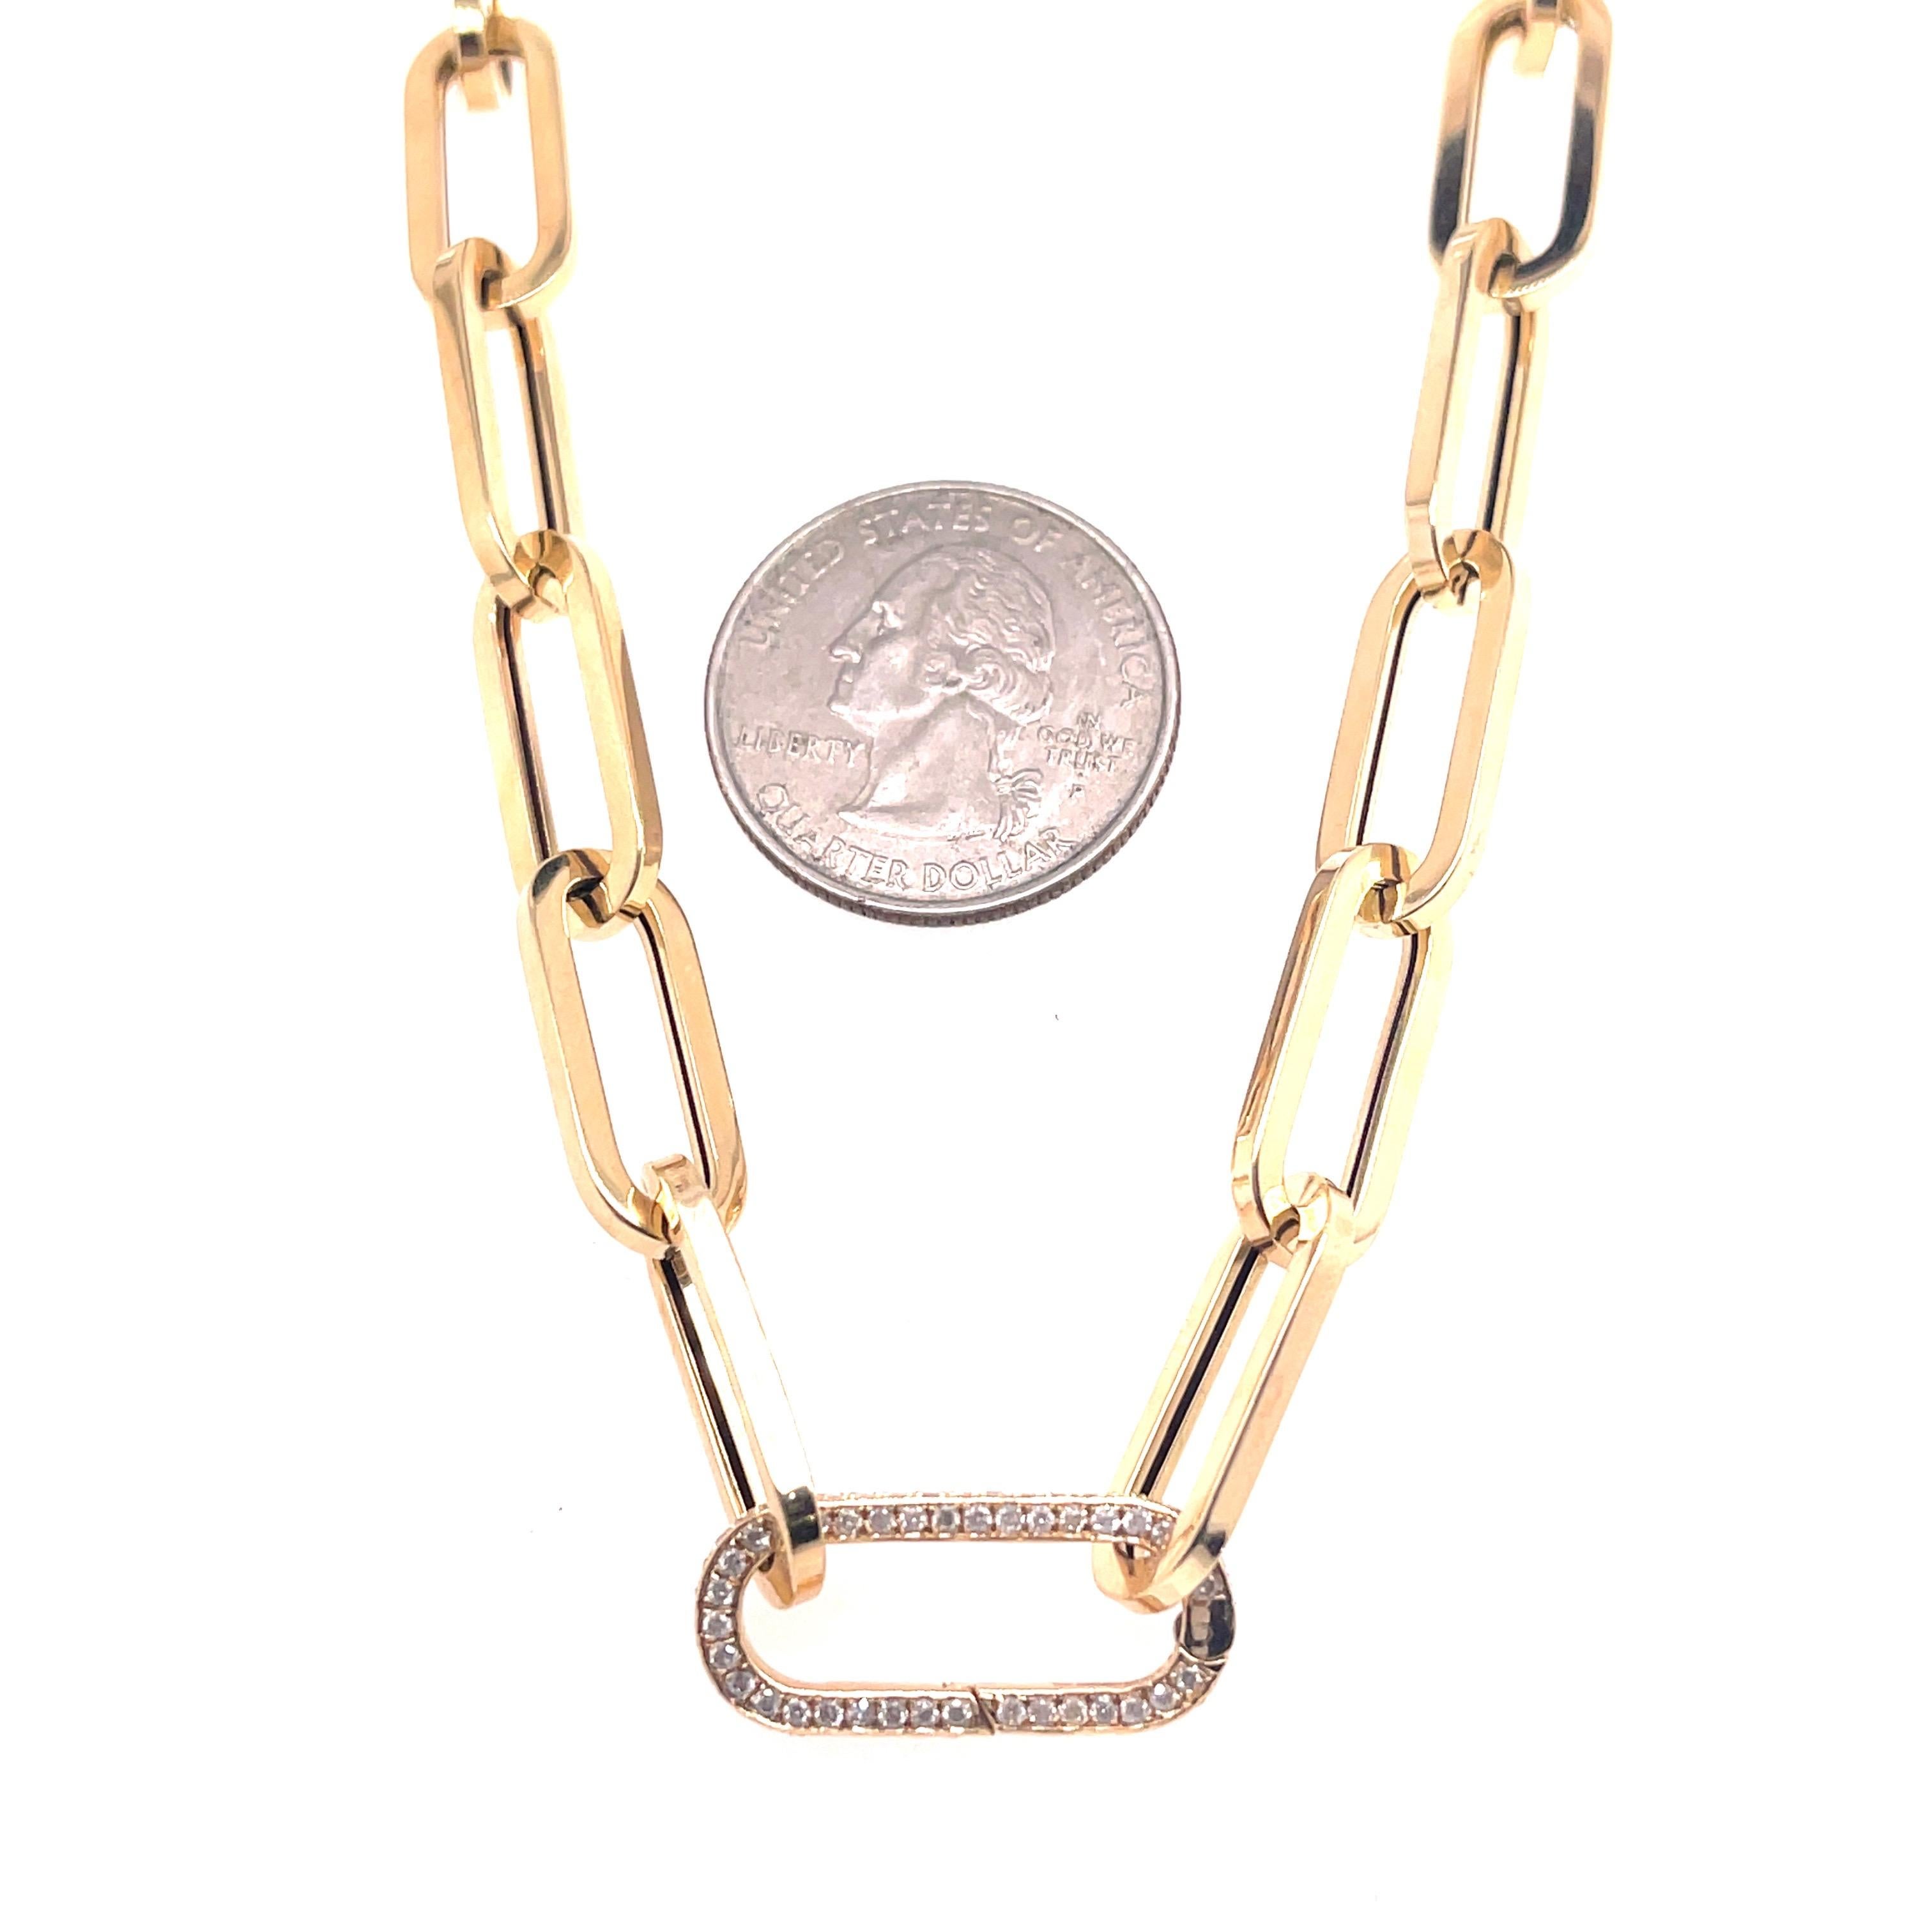 14k link Chain necklace 14.75 g
Diamond Clasp 2 g.